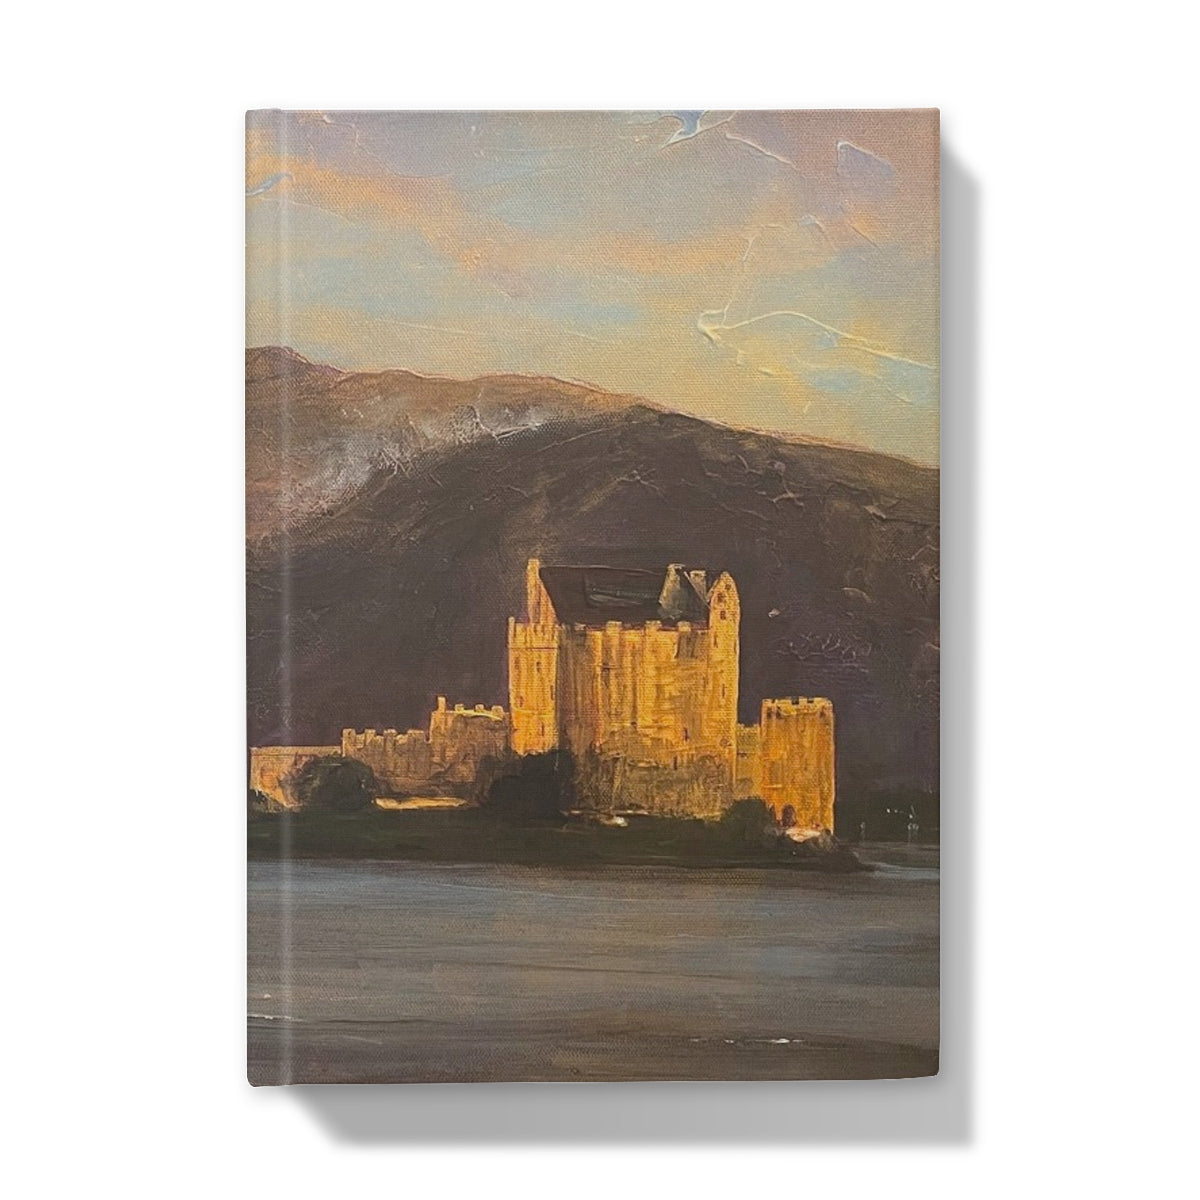 Eilean Donan Castle Art Gifts Hardback Journal-Journals & Notebooks-Historic & Iconic Scotland Art Gallery-5"x7"-Plain-Paintings, Prints, Homeware, Art Gifts From Scotland By Scottish Artist Kevin Hunter